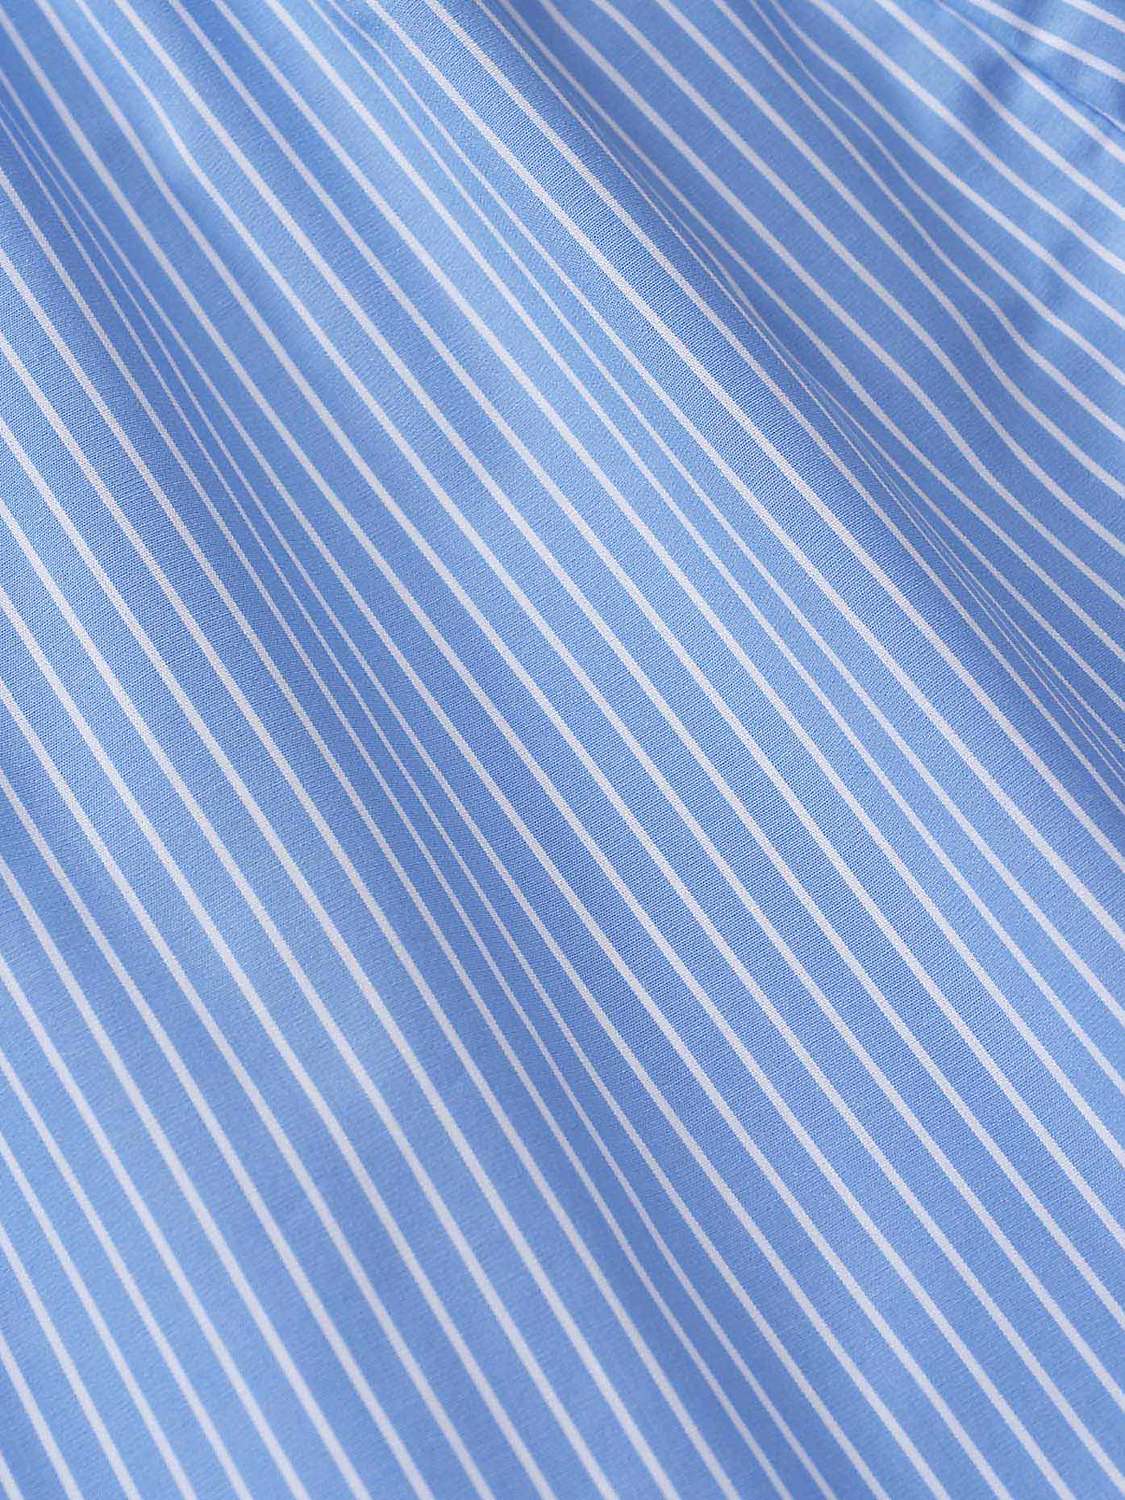 Buy British Boxers Stripe Crisp Cotton Pyjama Set Online at johnlewis.com